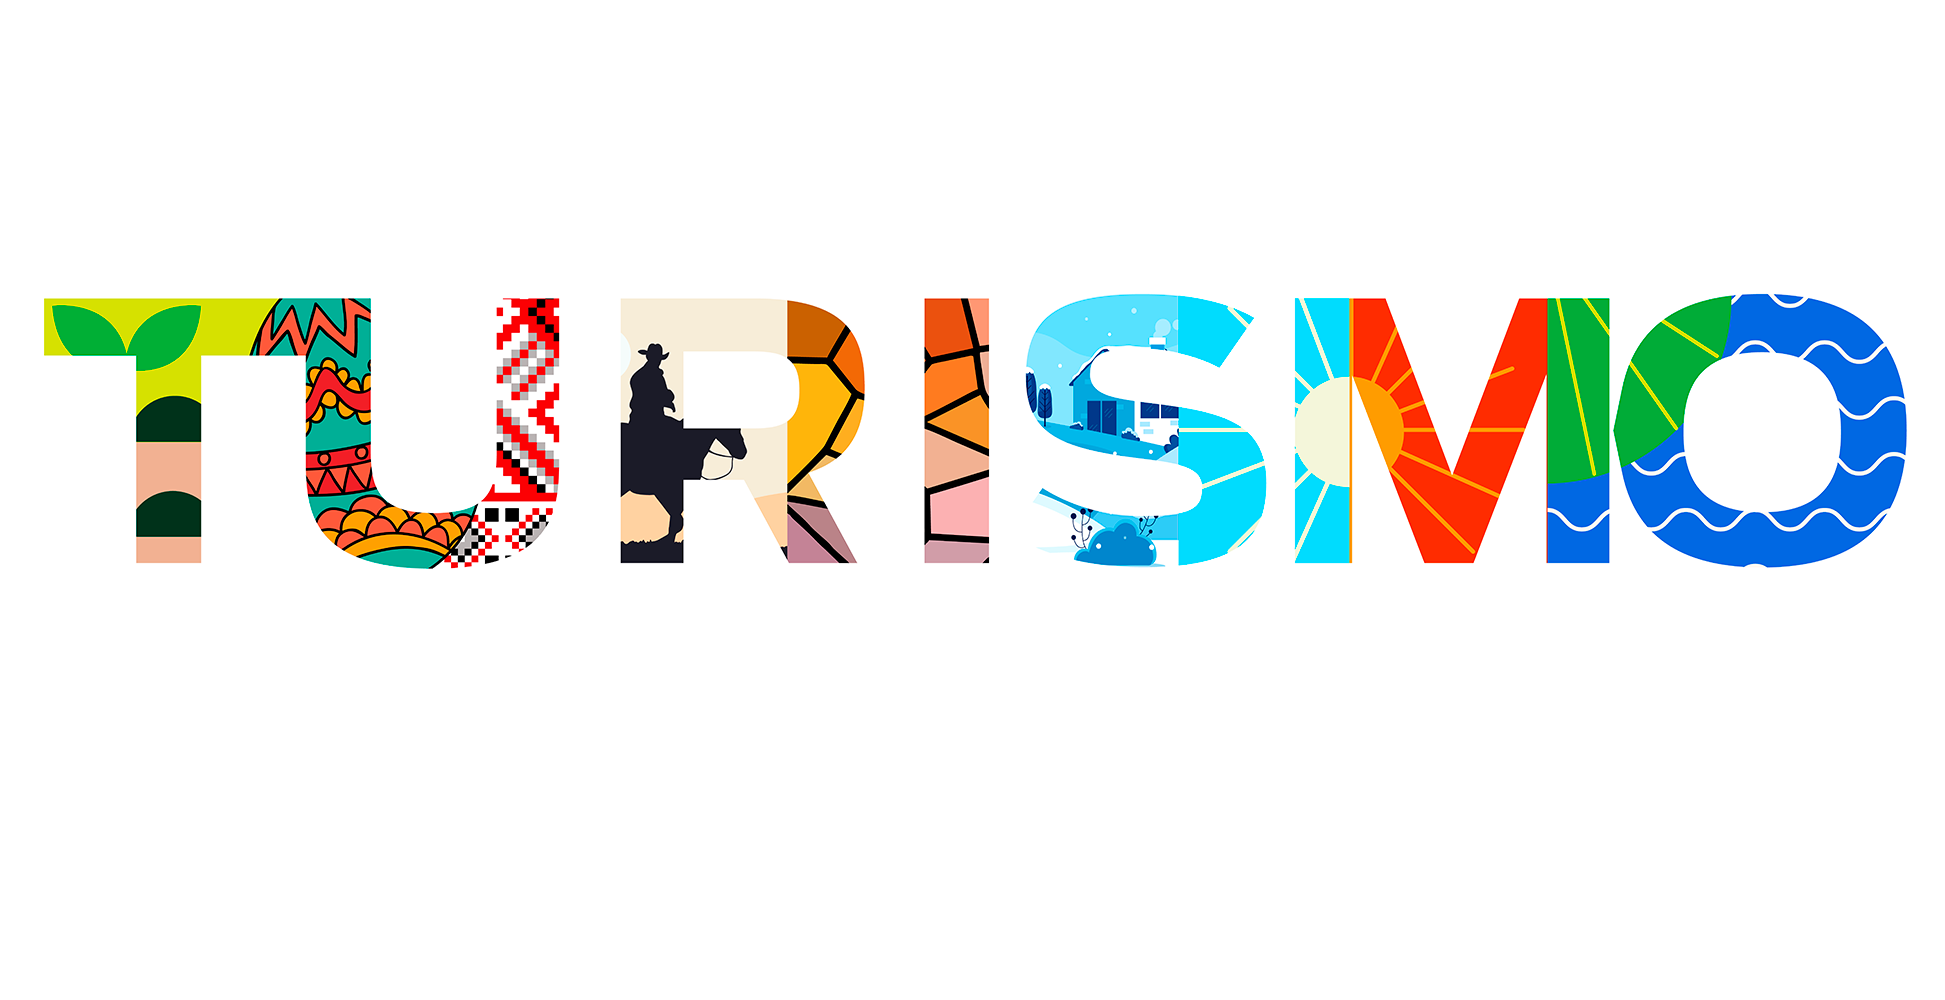 Turismo de Papanduva